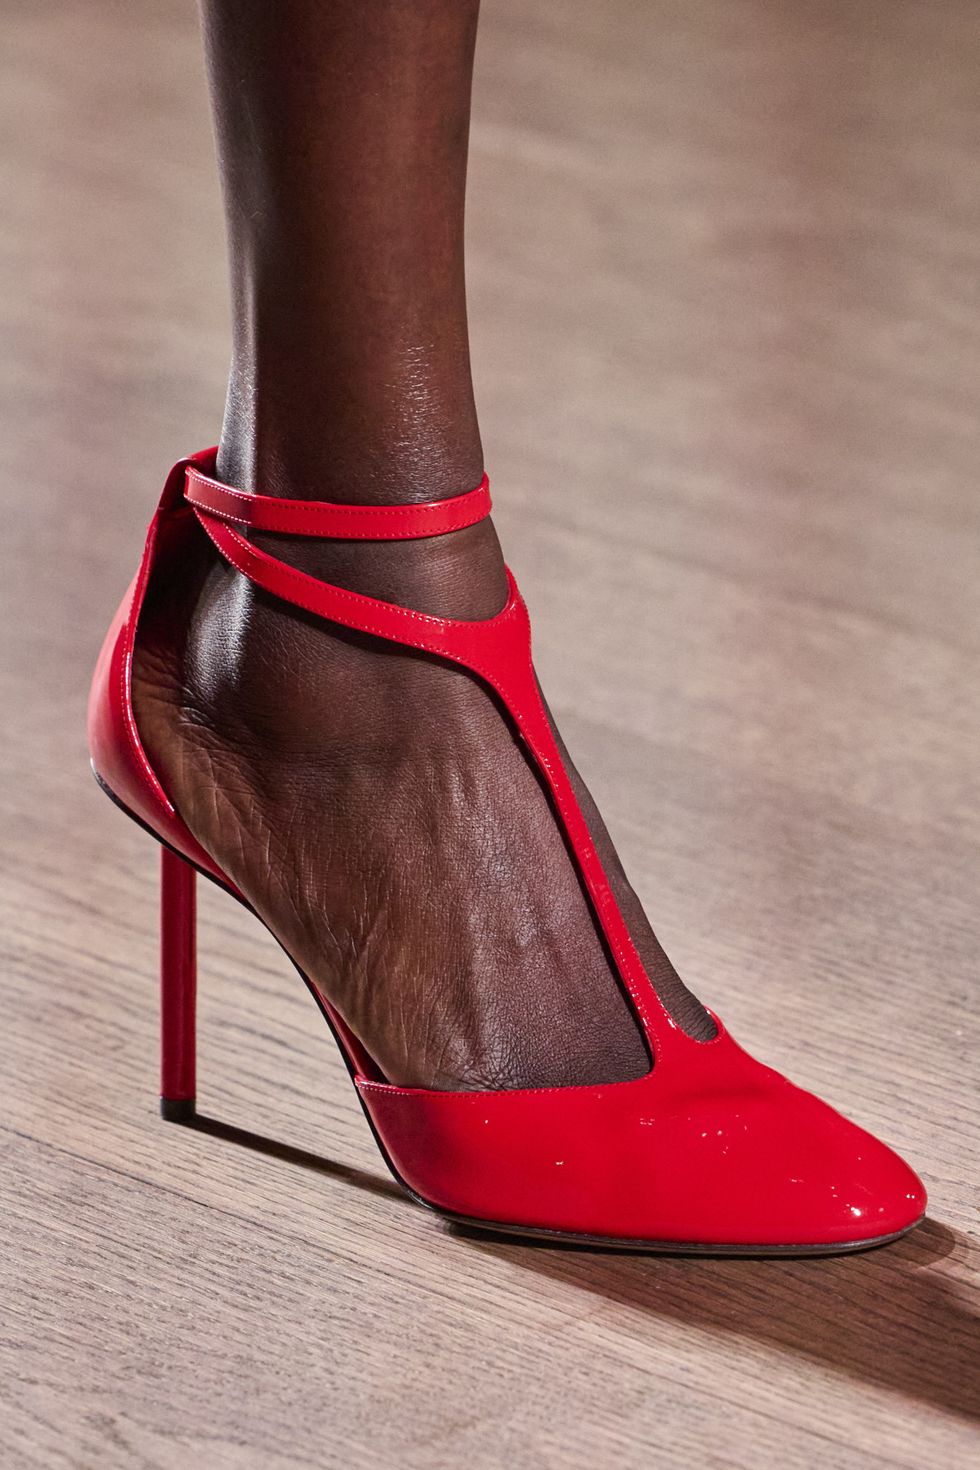 a red high heeled shoe